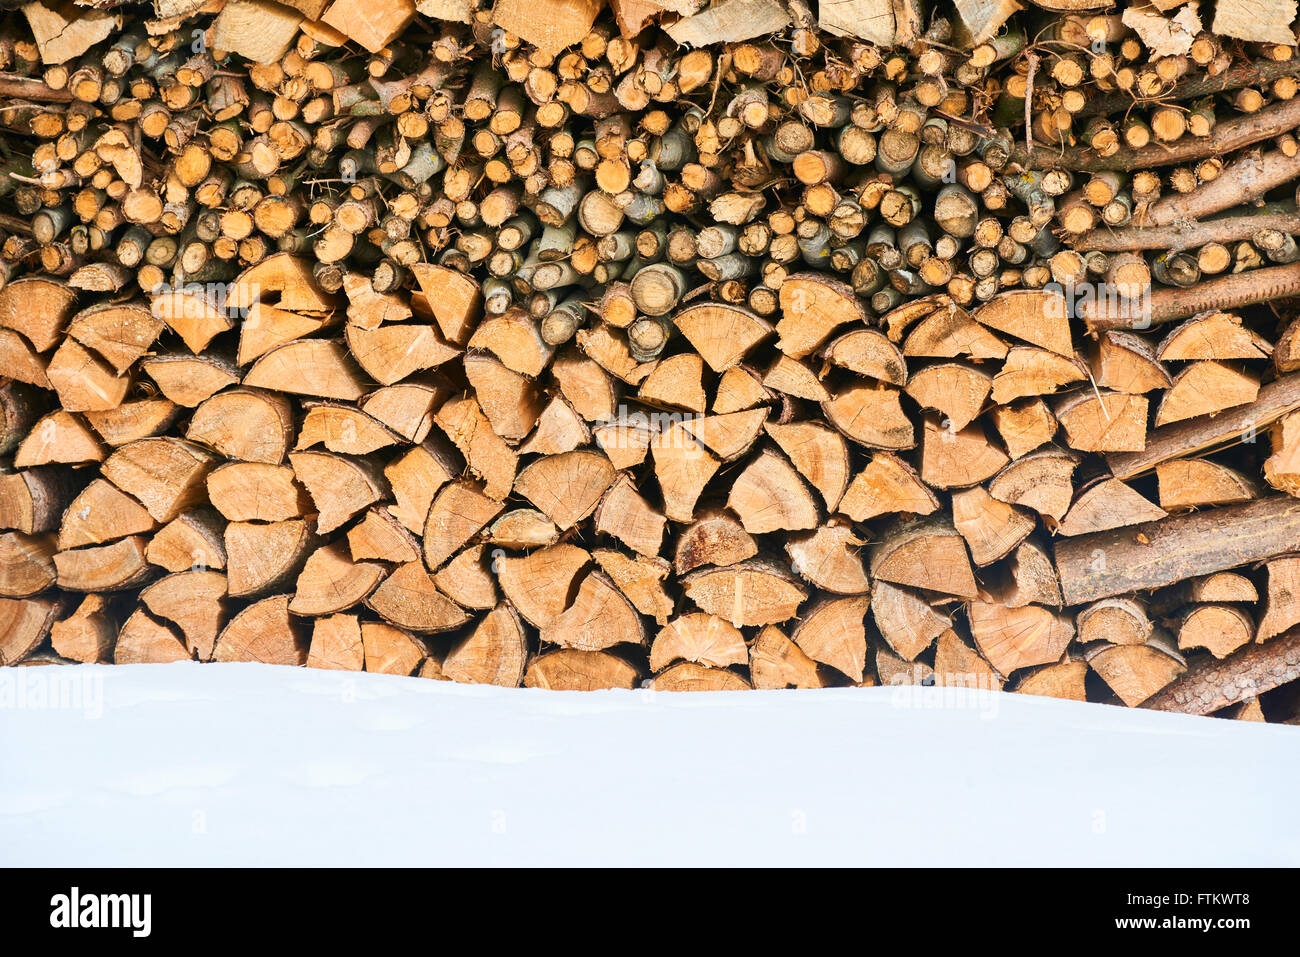 Brennholz gestapelt im Winter. Holz-Haufen mit Schnee für Brennholz gestapelt Stockfoto